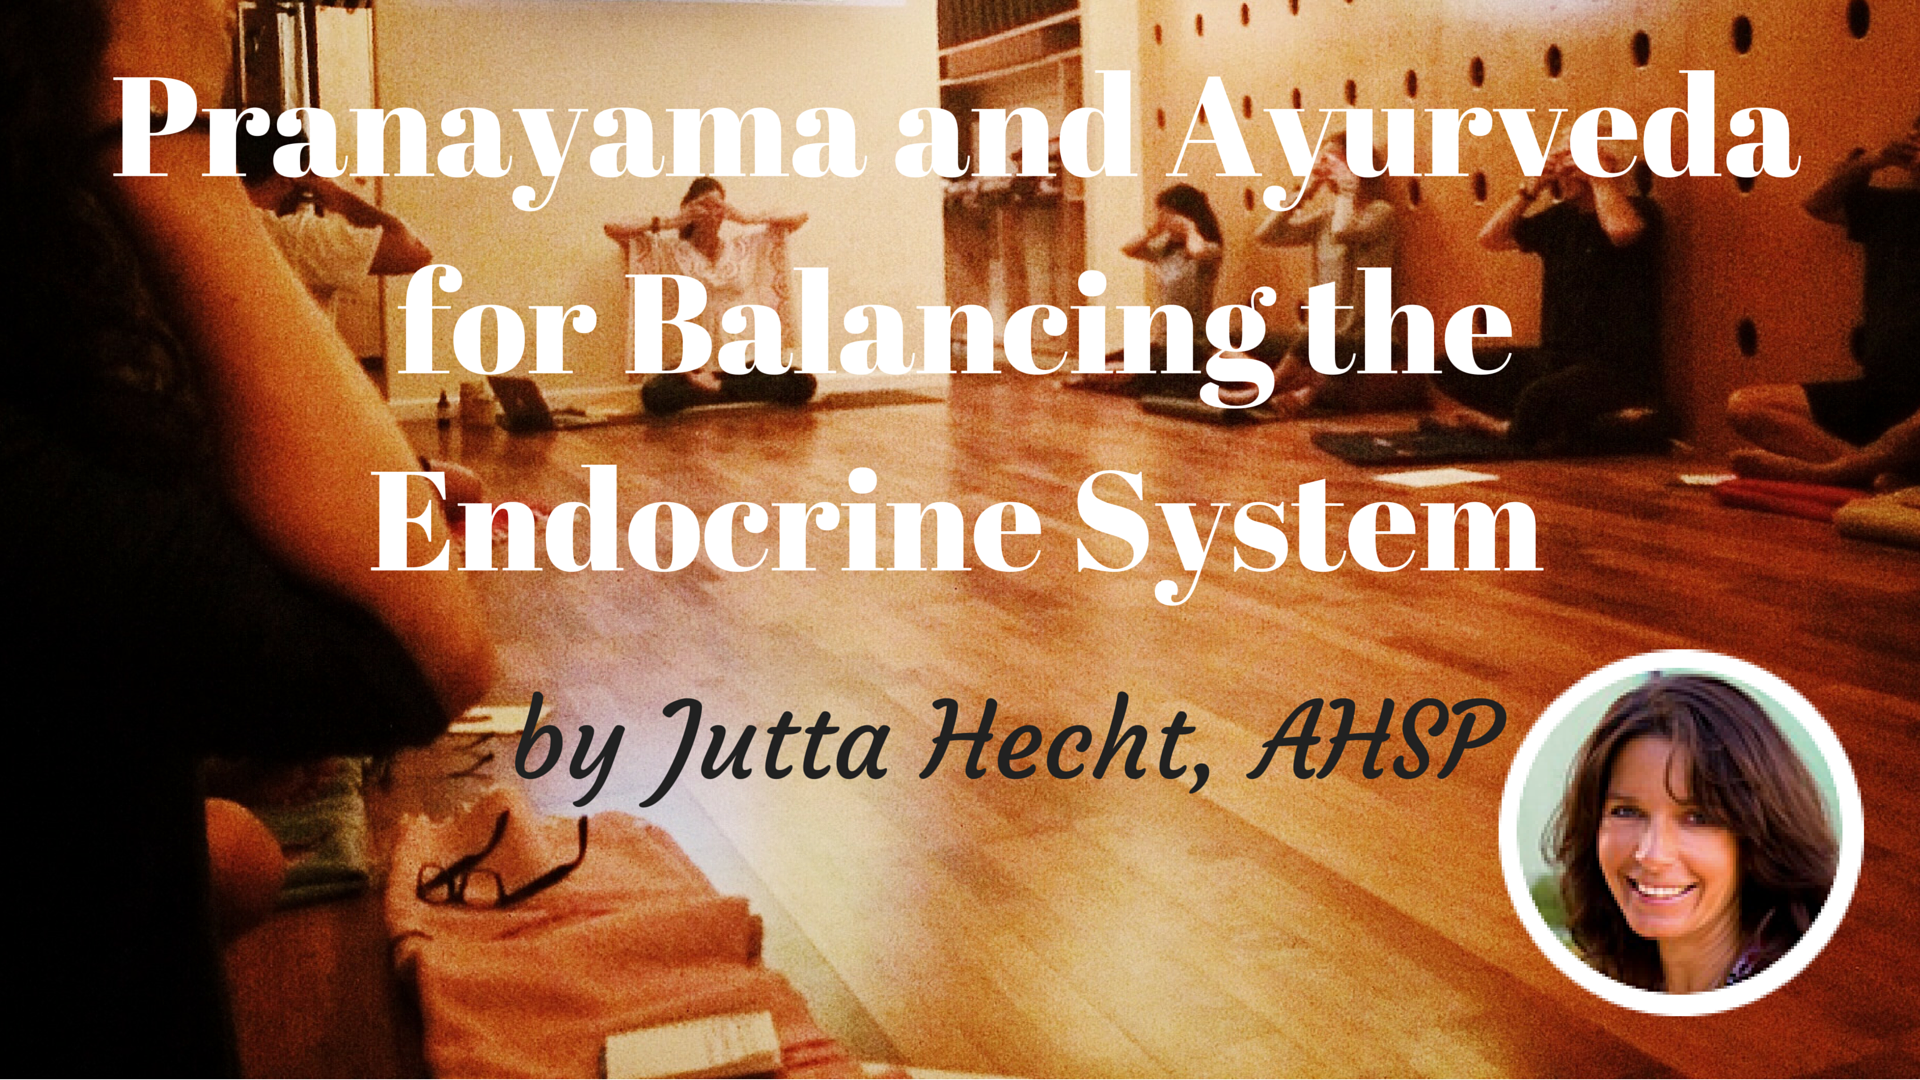 Pranayama Endocrine System with Jutta Hecht